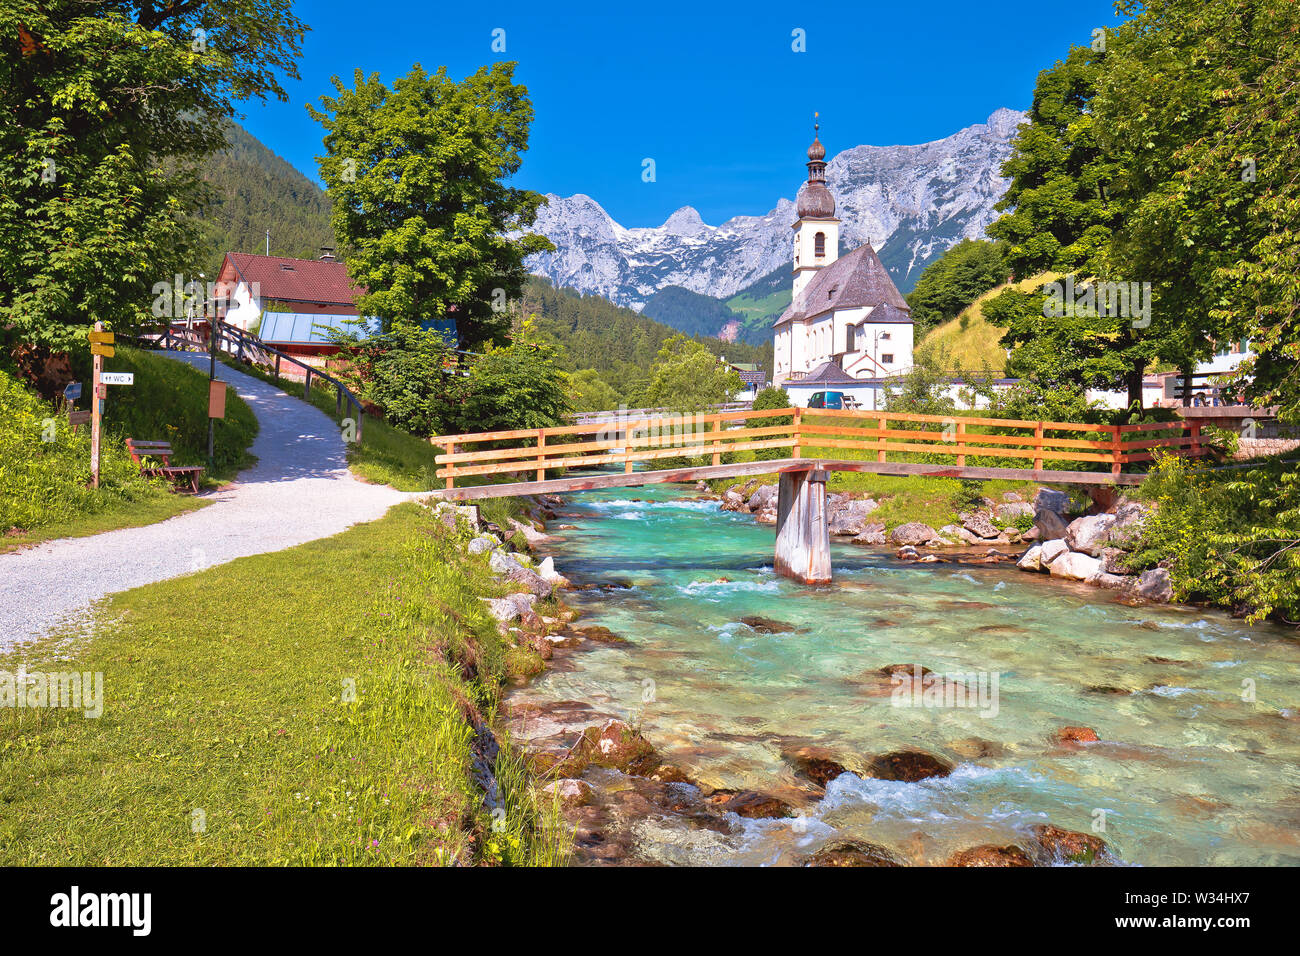 Sankt Sebastian pilgrimage church with alpine turquoise river alpine landscape view, Ramsau, Nationalpark Berchtesgadener Land, Bavaria, Germany Stock Photo